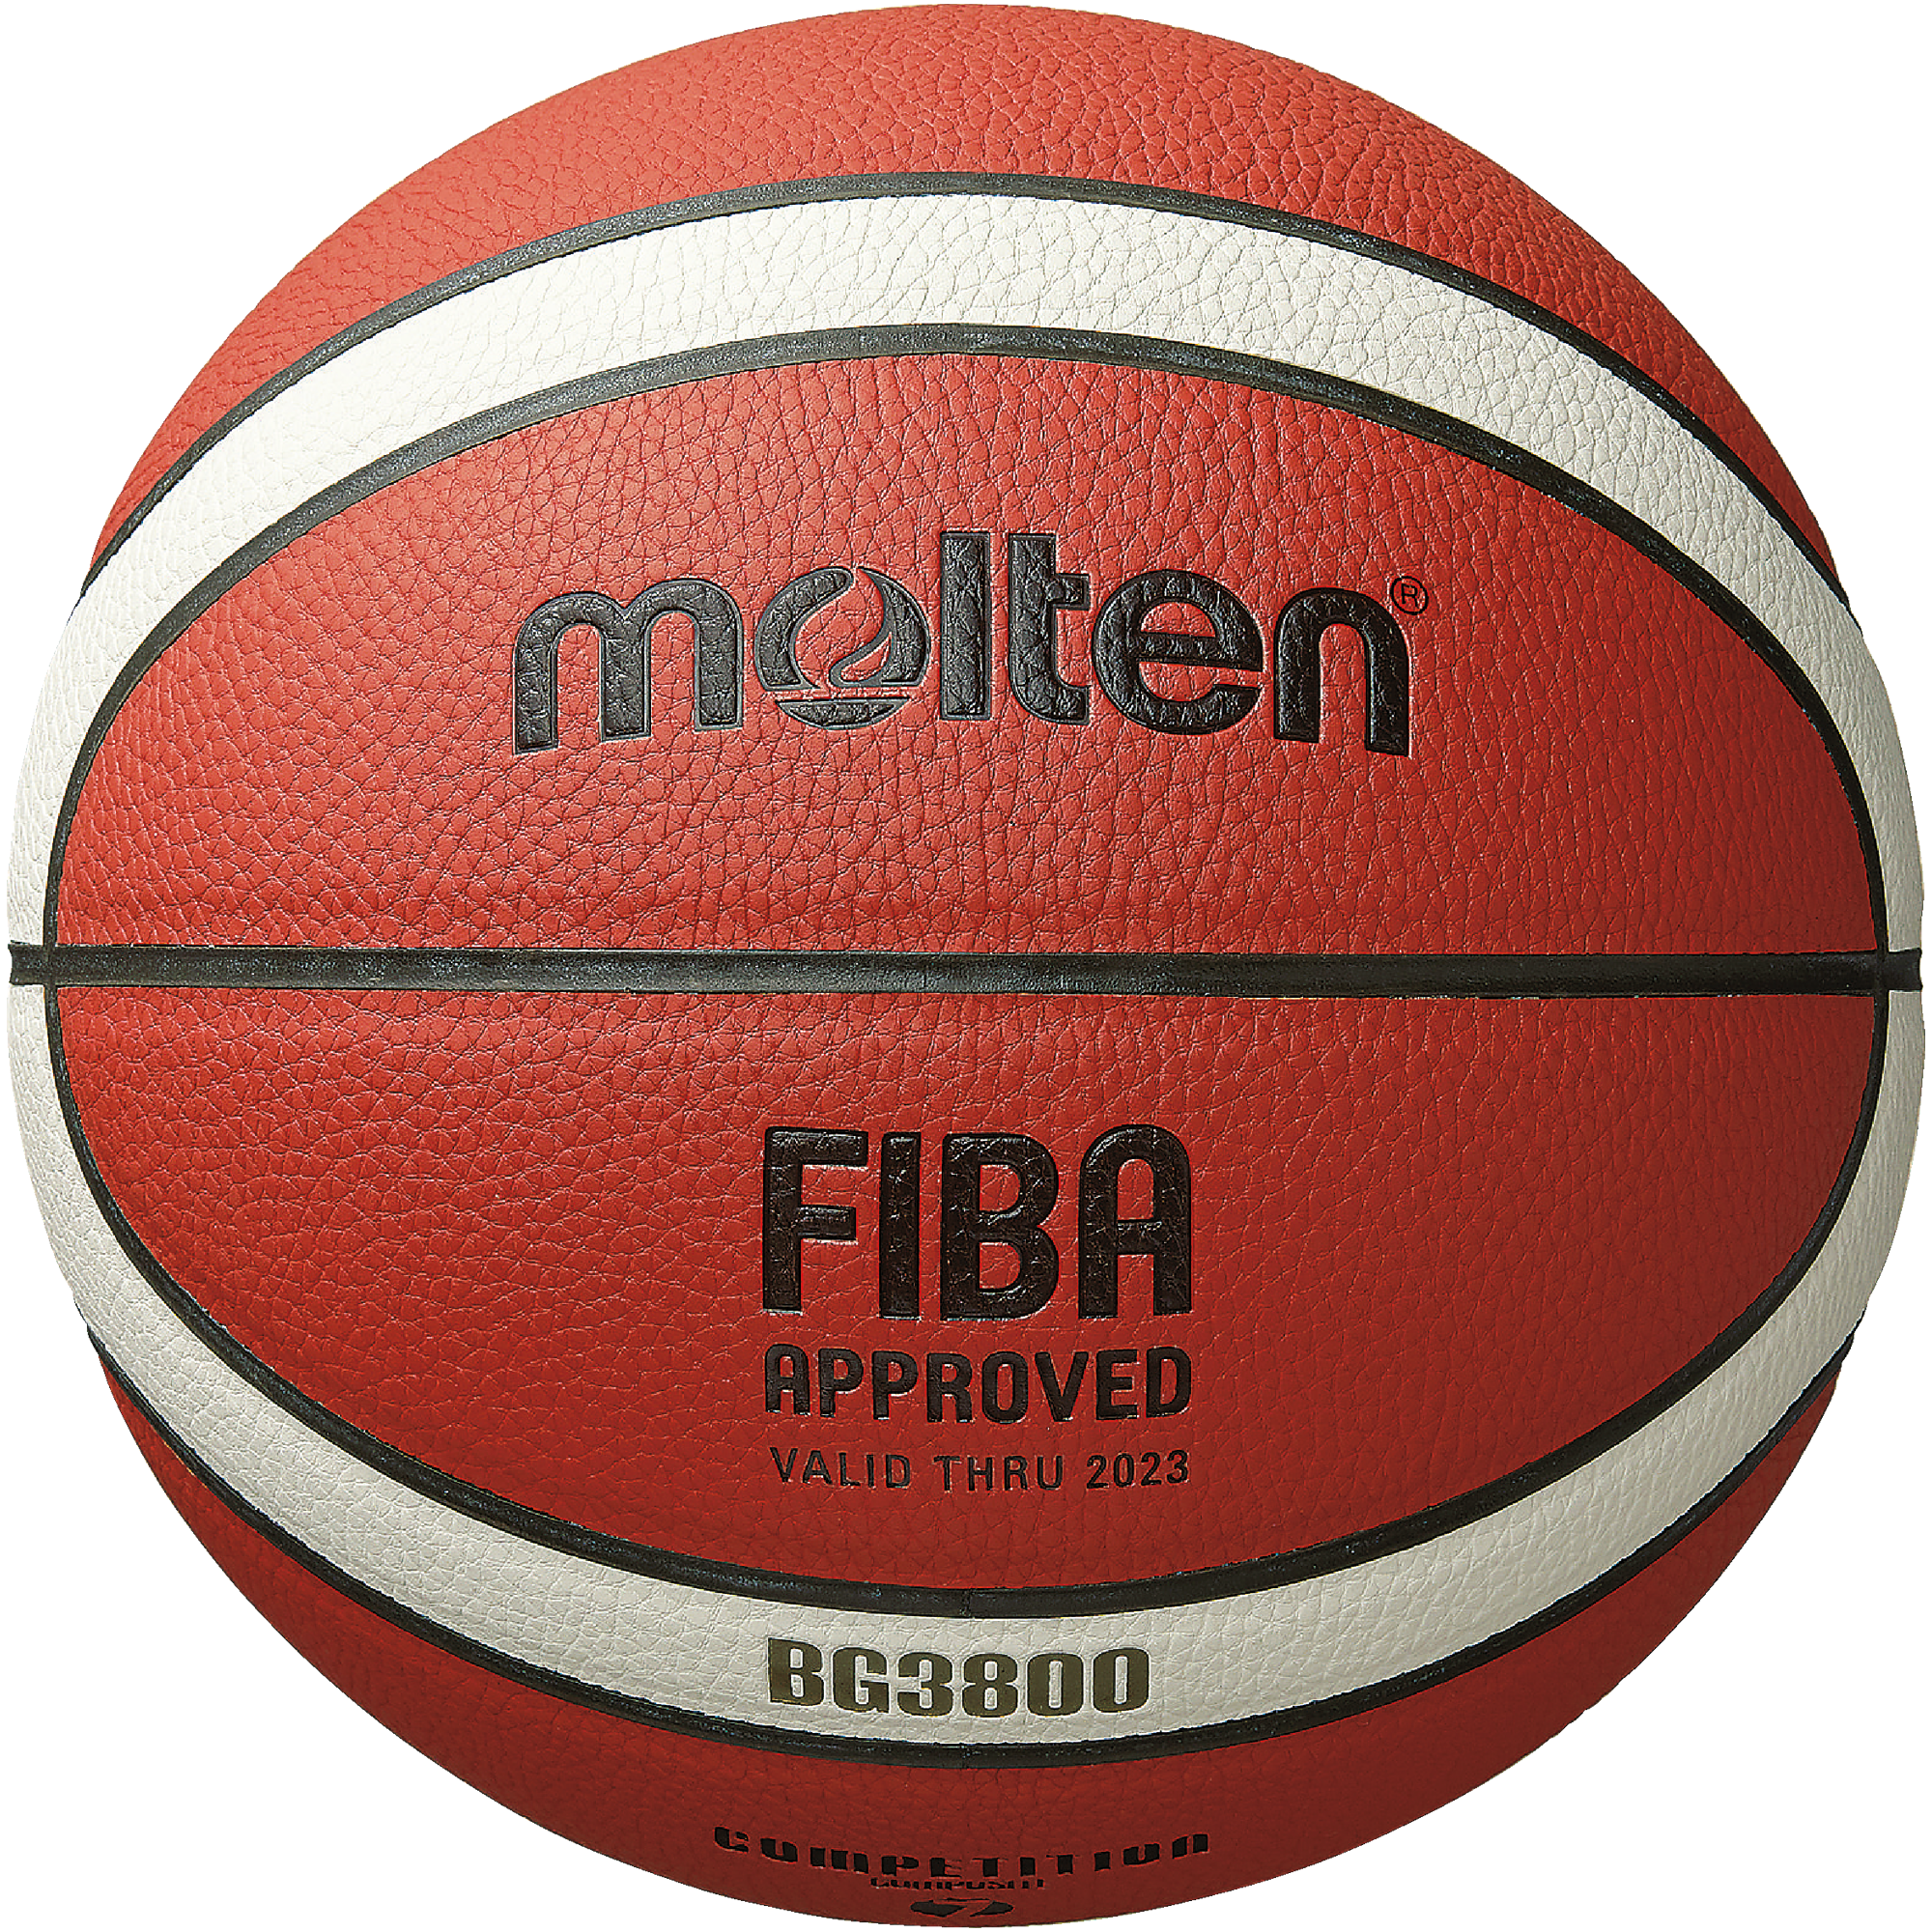 molten-basketball-B5G3800_1bc25d97-5709-4ad4-ad4c-fcdf80a382d6.png